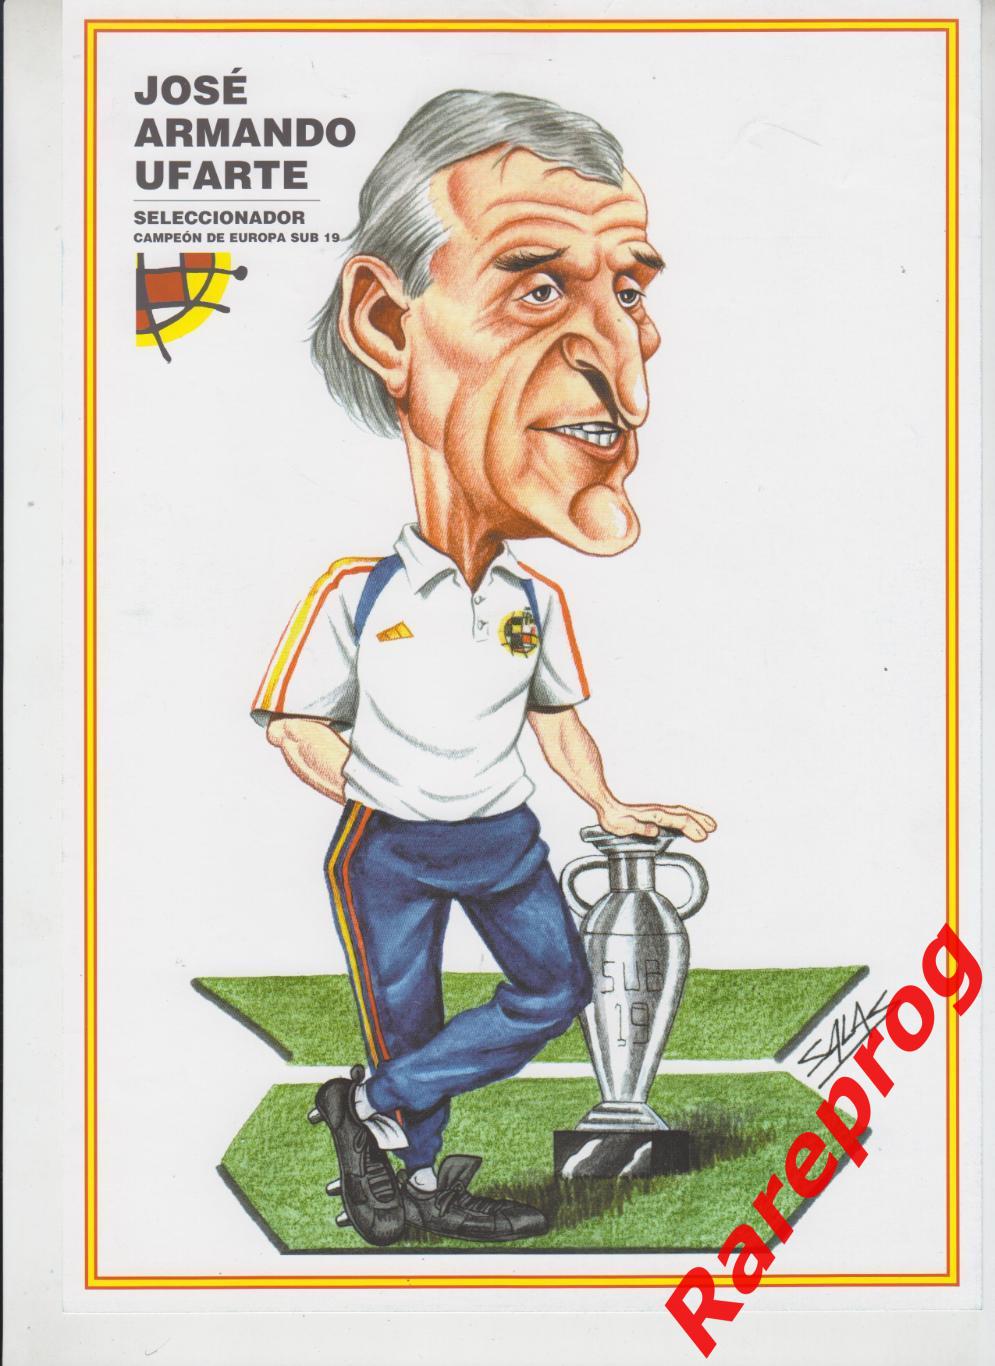 журнал Футбол RFEF Испания № 65 июль - август 2004 - постер Jose Armando Ufarte 1